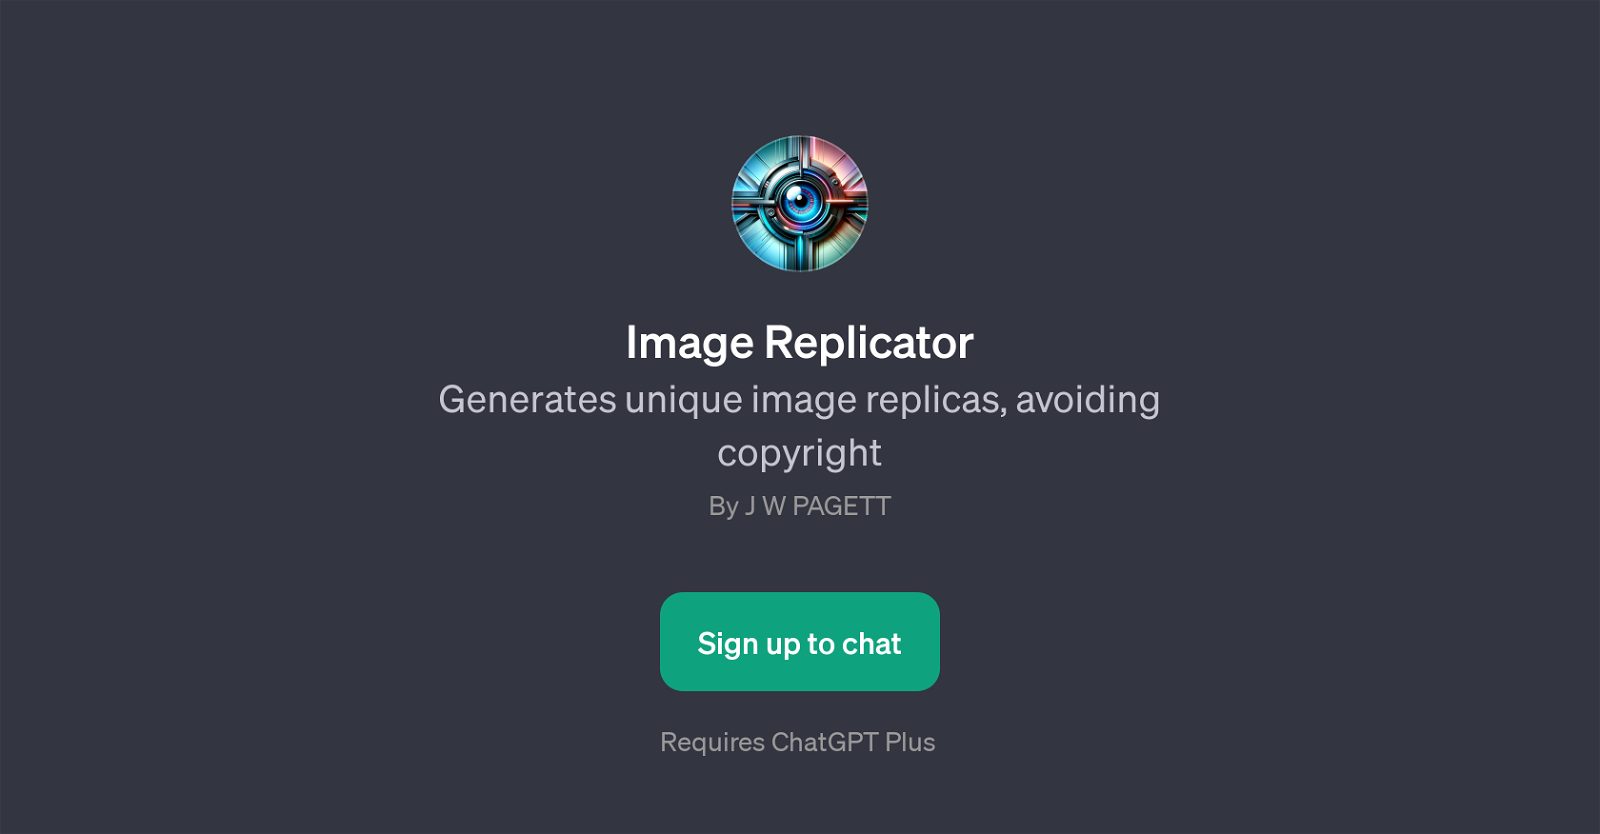 Image Replicator website